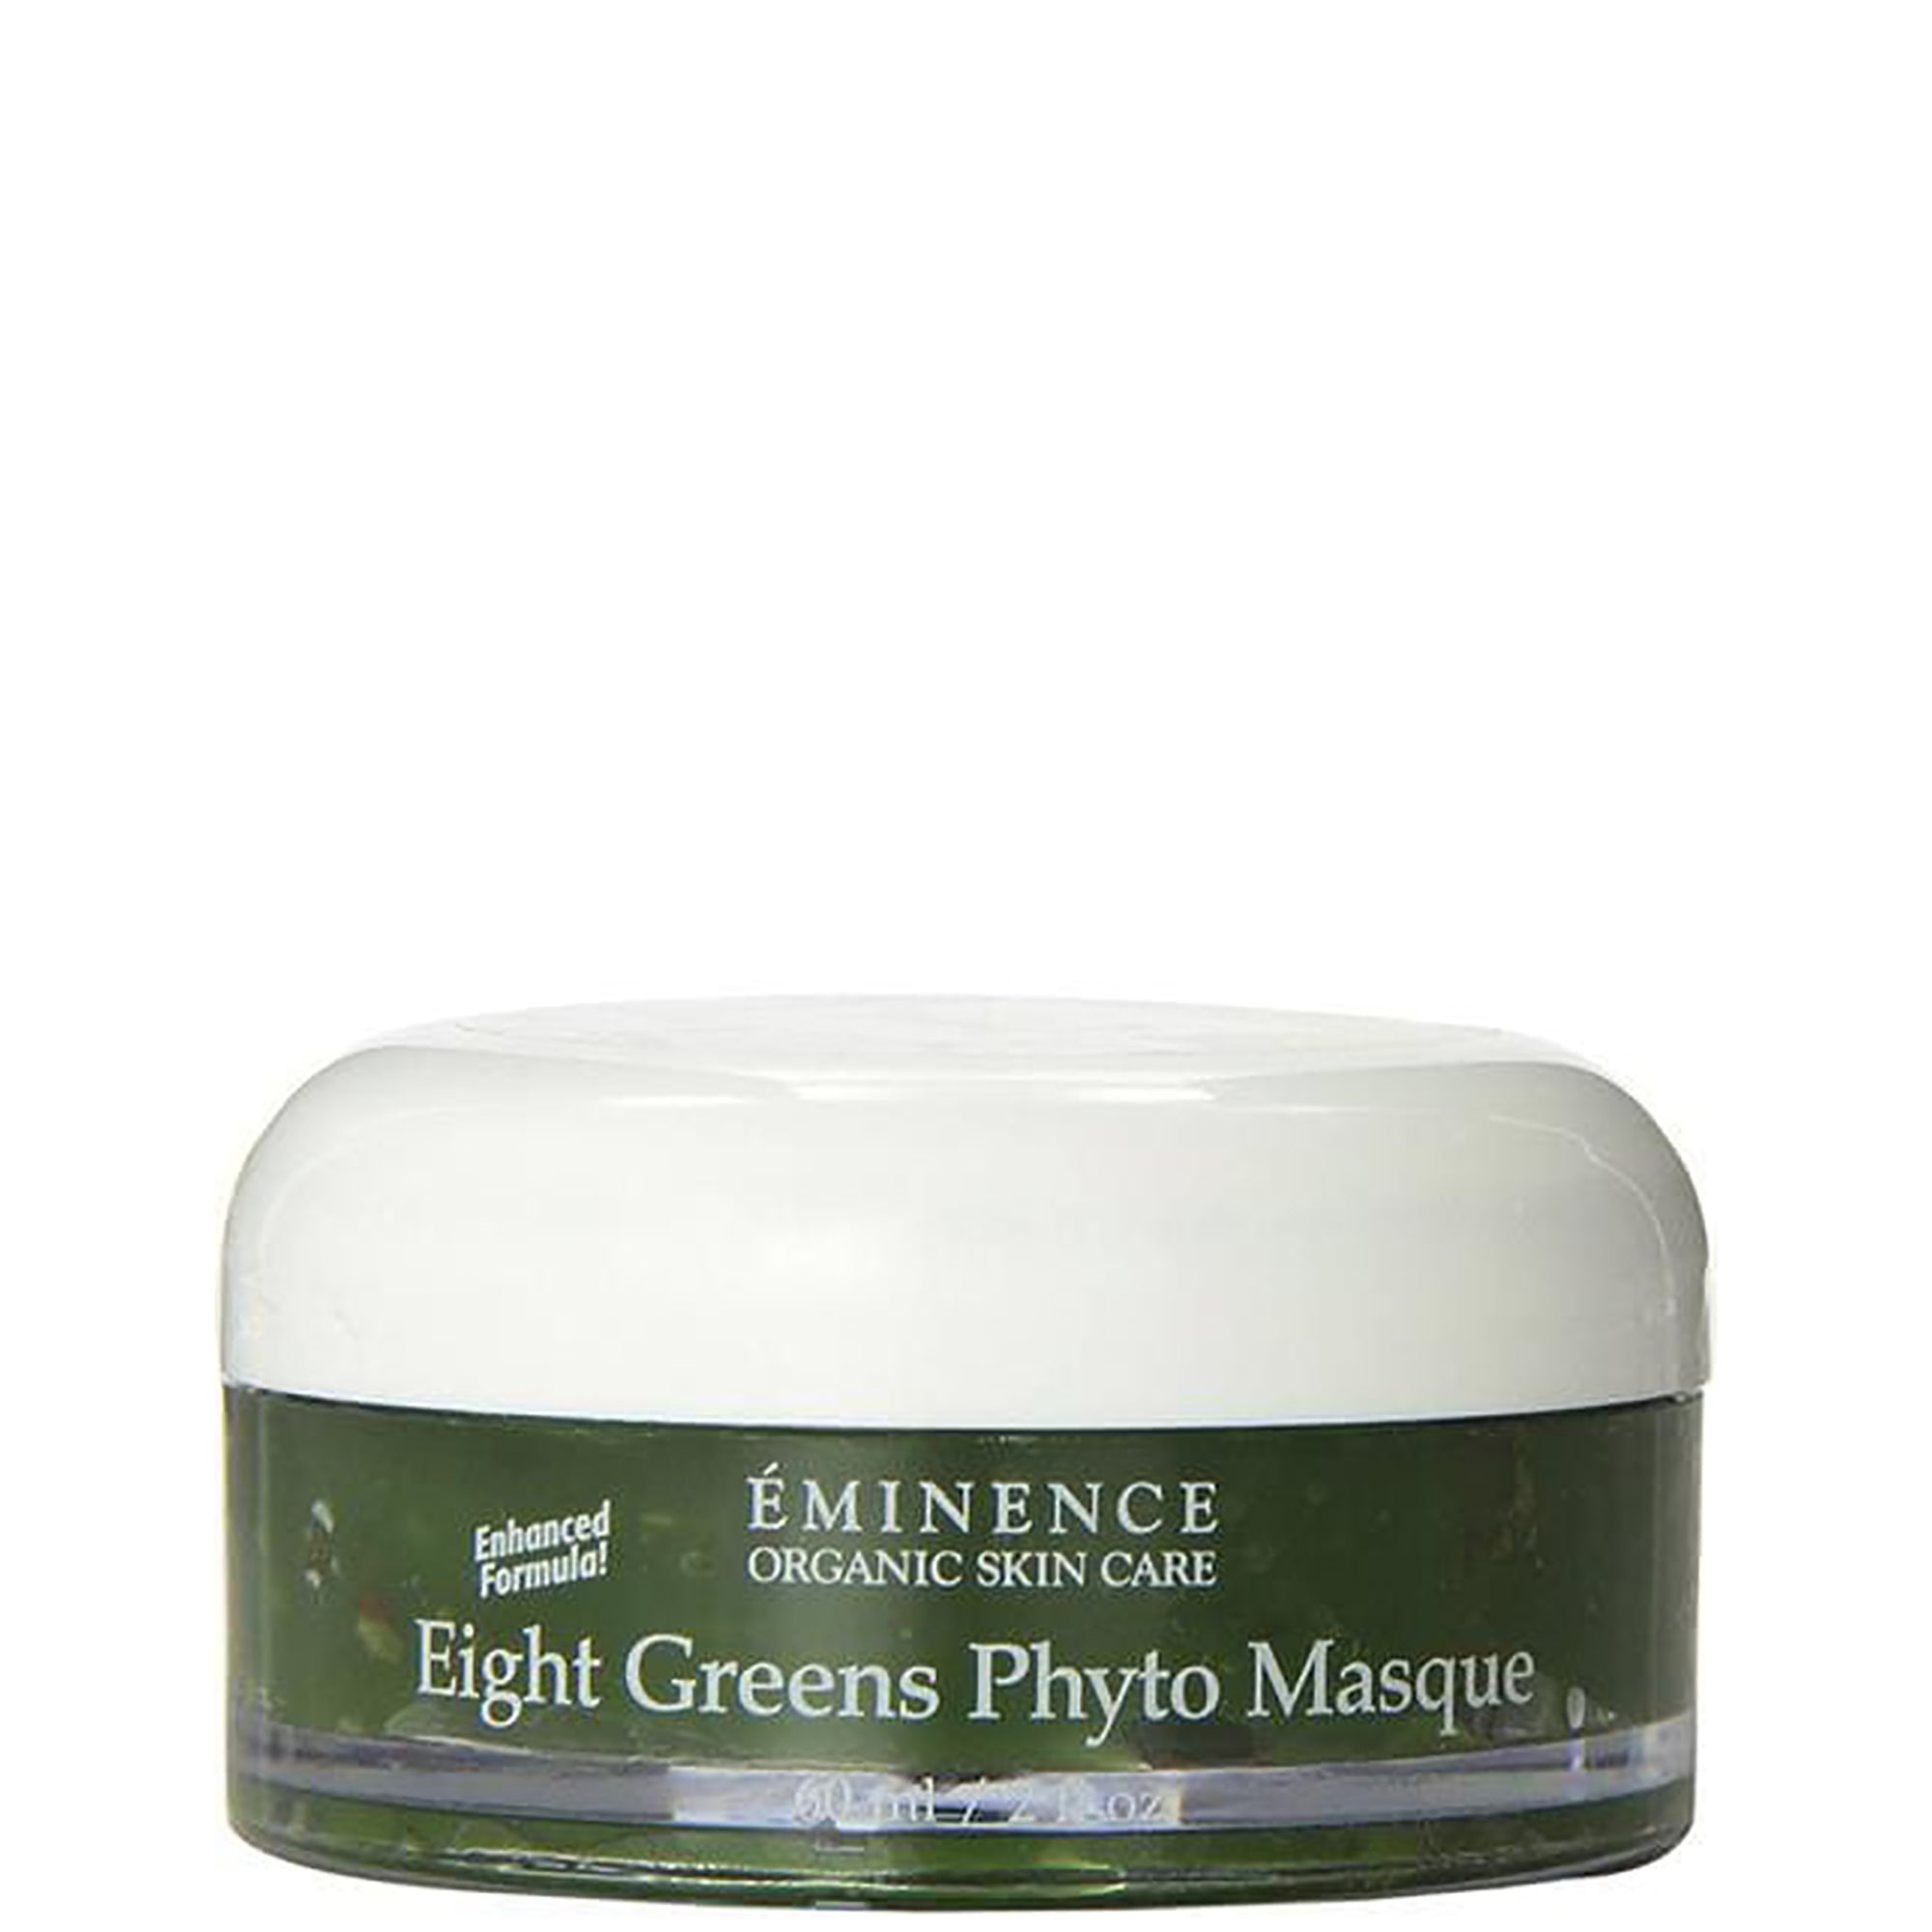 Eminence Organics Eight Greens Phyto Masque / NOT HOT